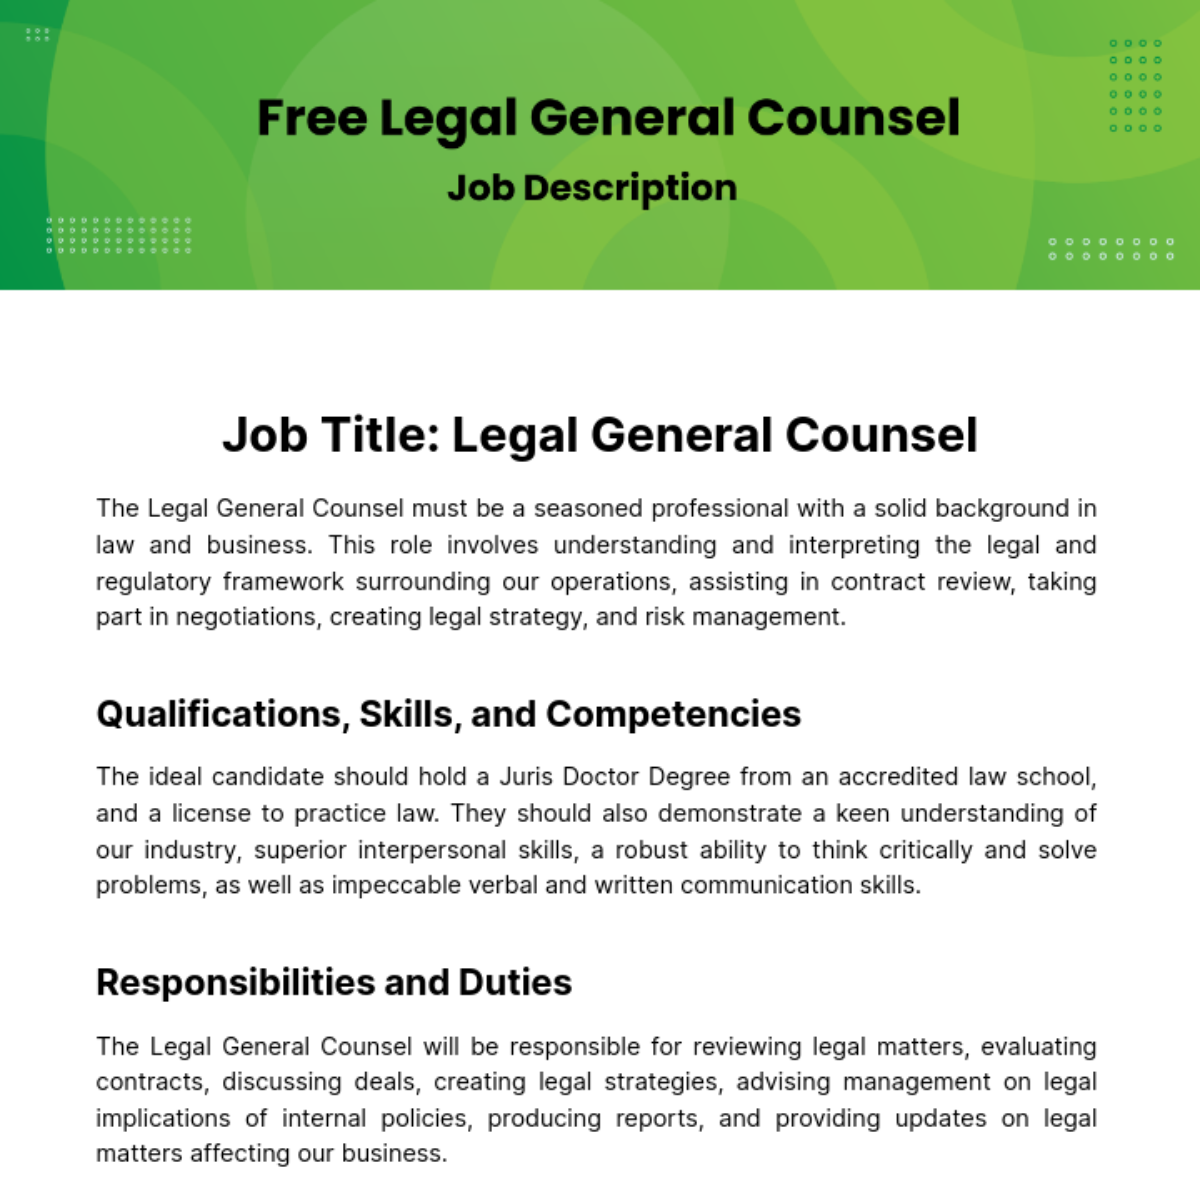 Free Legal General Counsel Job Description Template